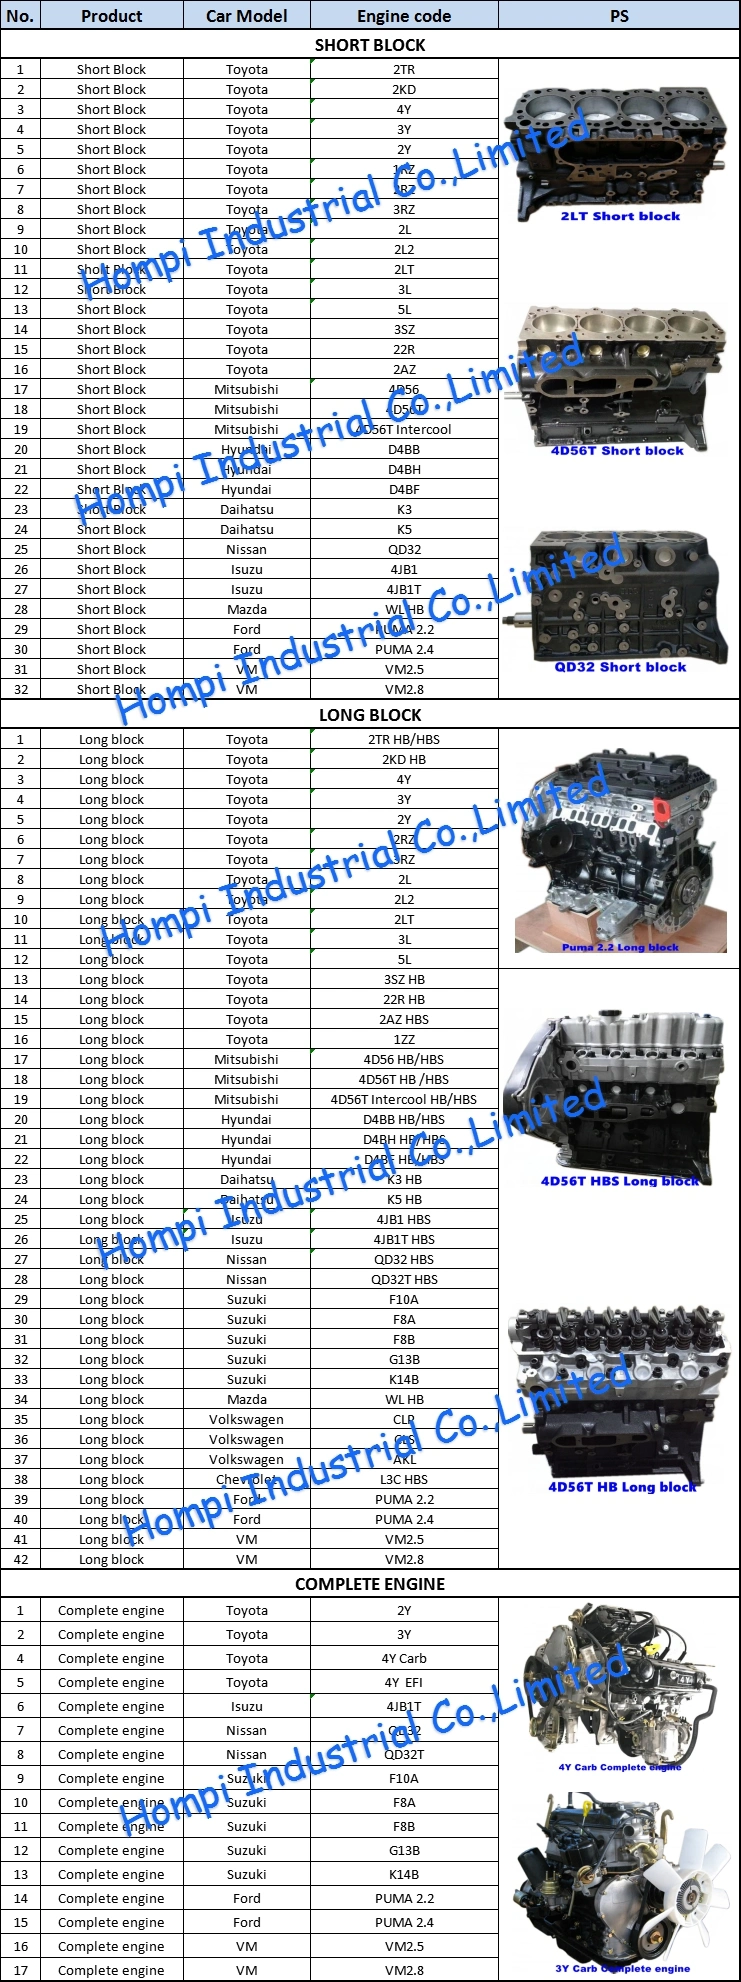 Auto Engine Long Block for Ford Transit Puma 2.4 Puma2.2/Vm2.5/Vm2.8